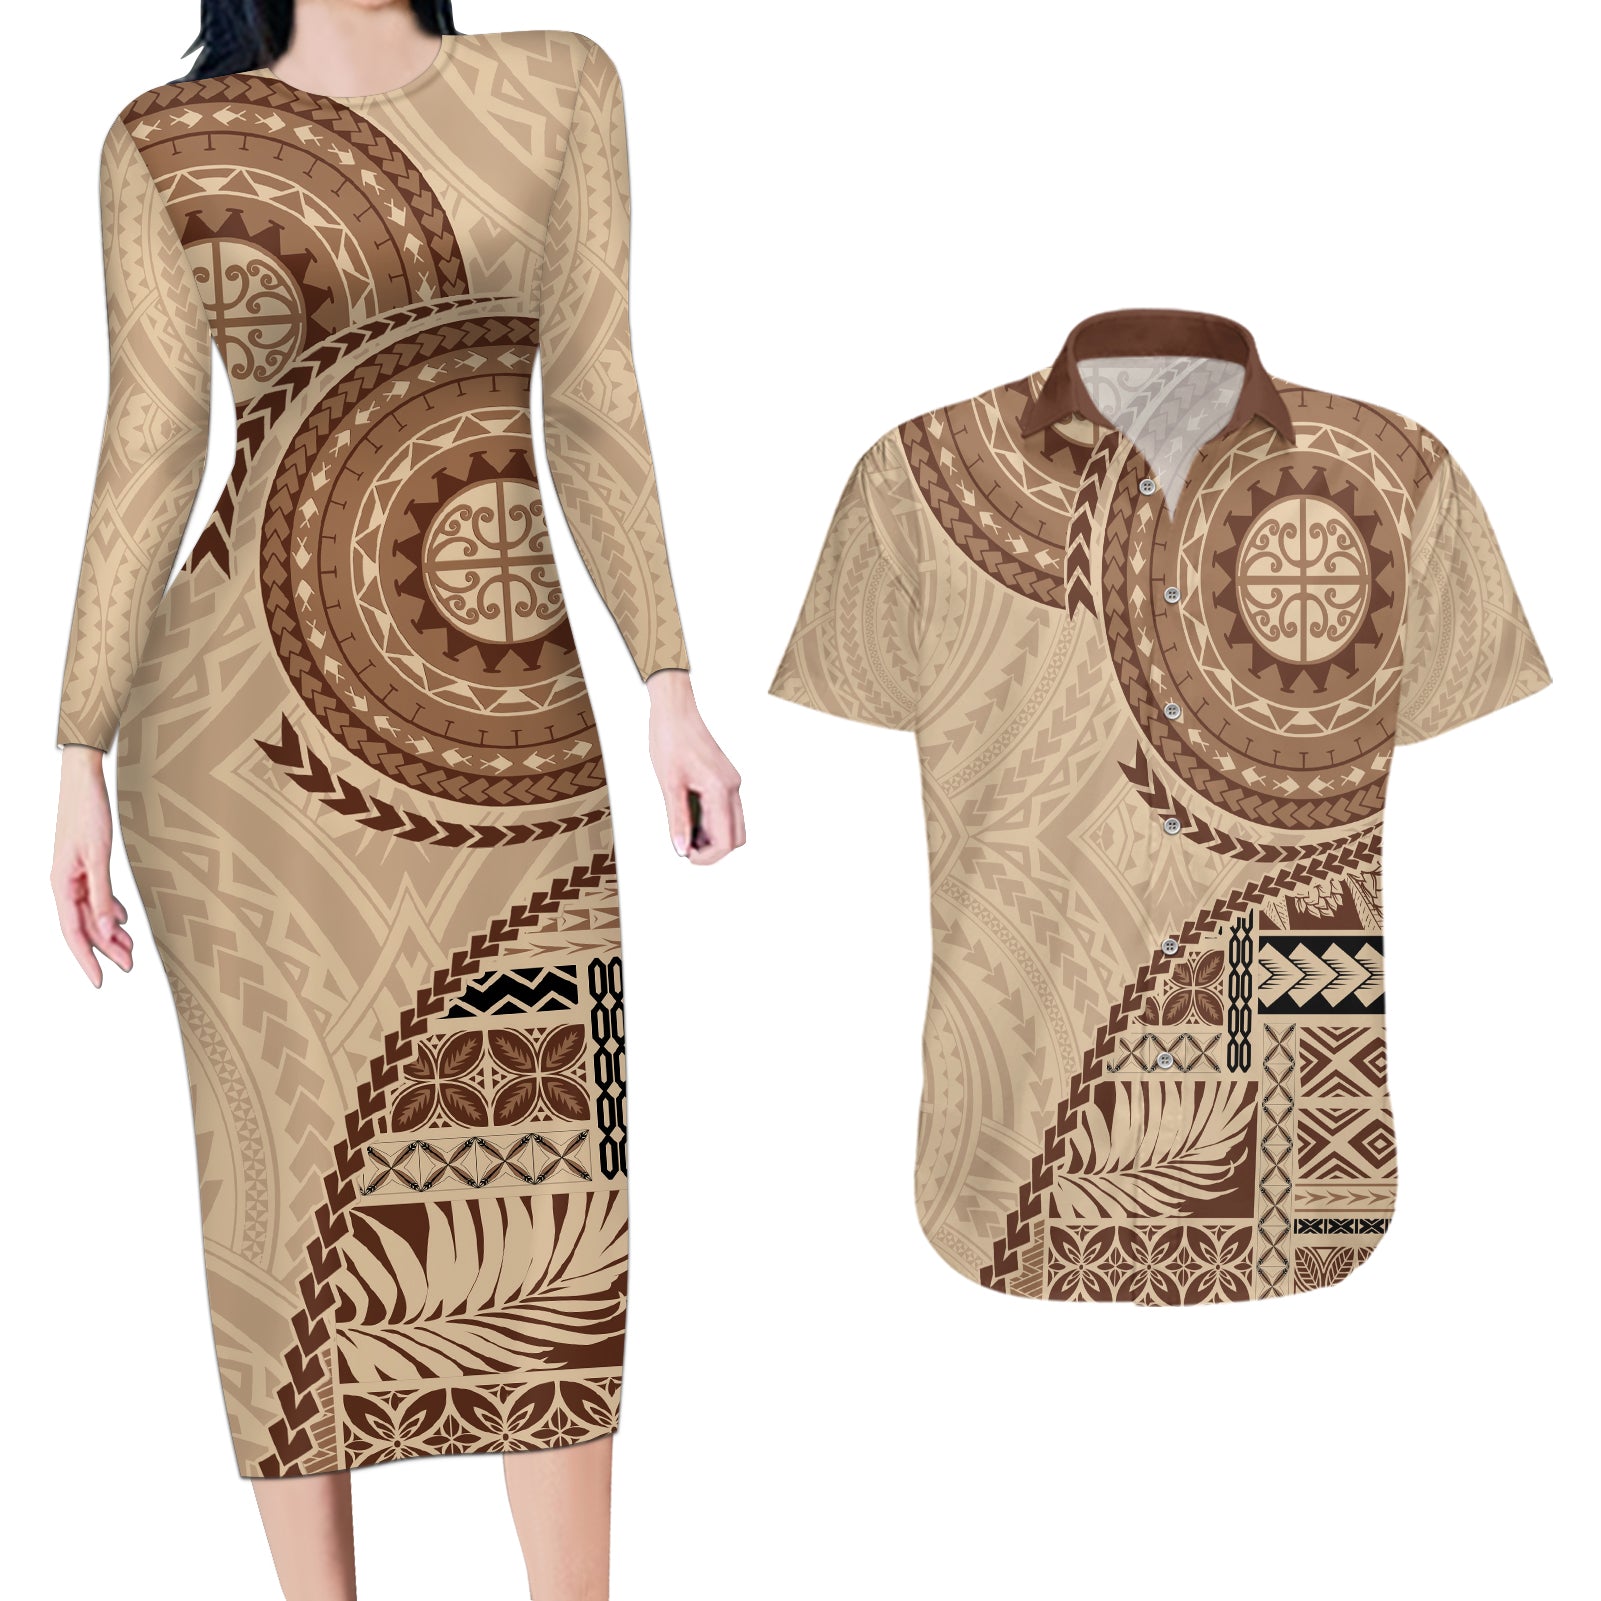 Samoa Siapo Pattern Simple Style Couples Matching Long Sleeve Bodycon Dress and Hawaiian Shirt LT05 Brown - Polynesian Pride